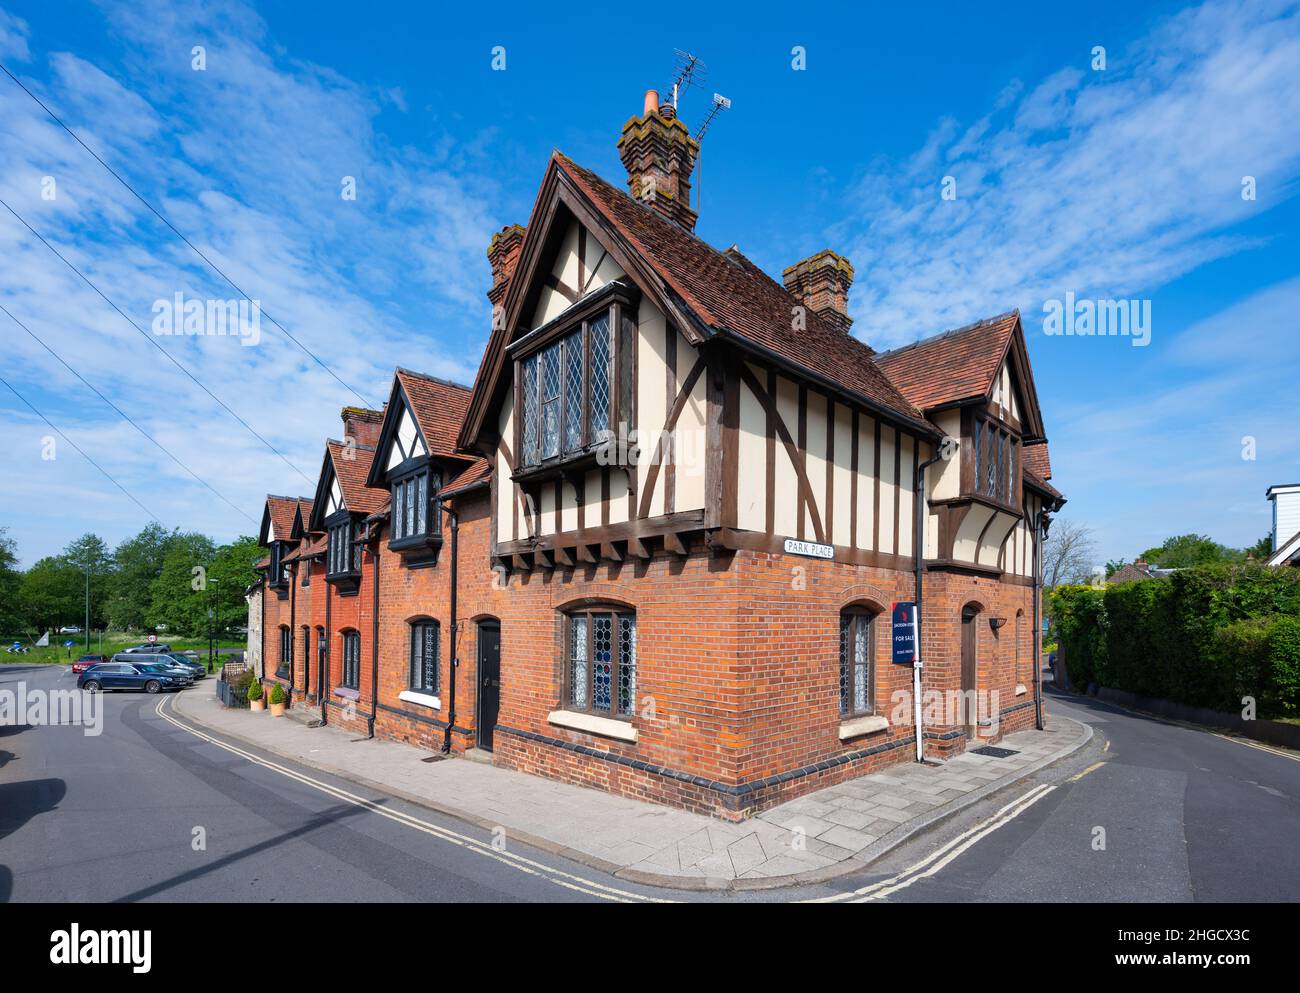 Large Tudor style house or housing terrace in Arundel, West Sussex, England, UK. Stock Photo